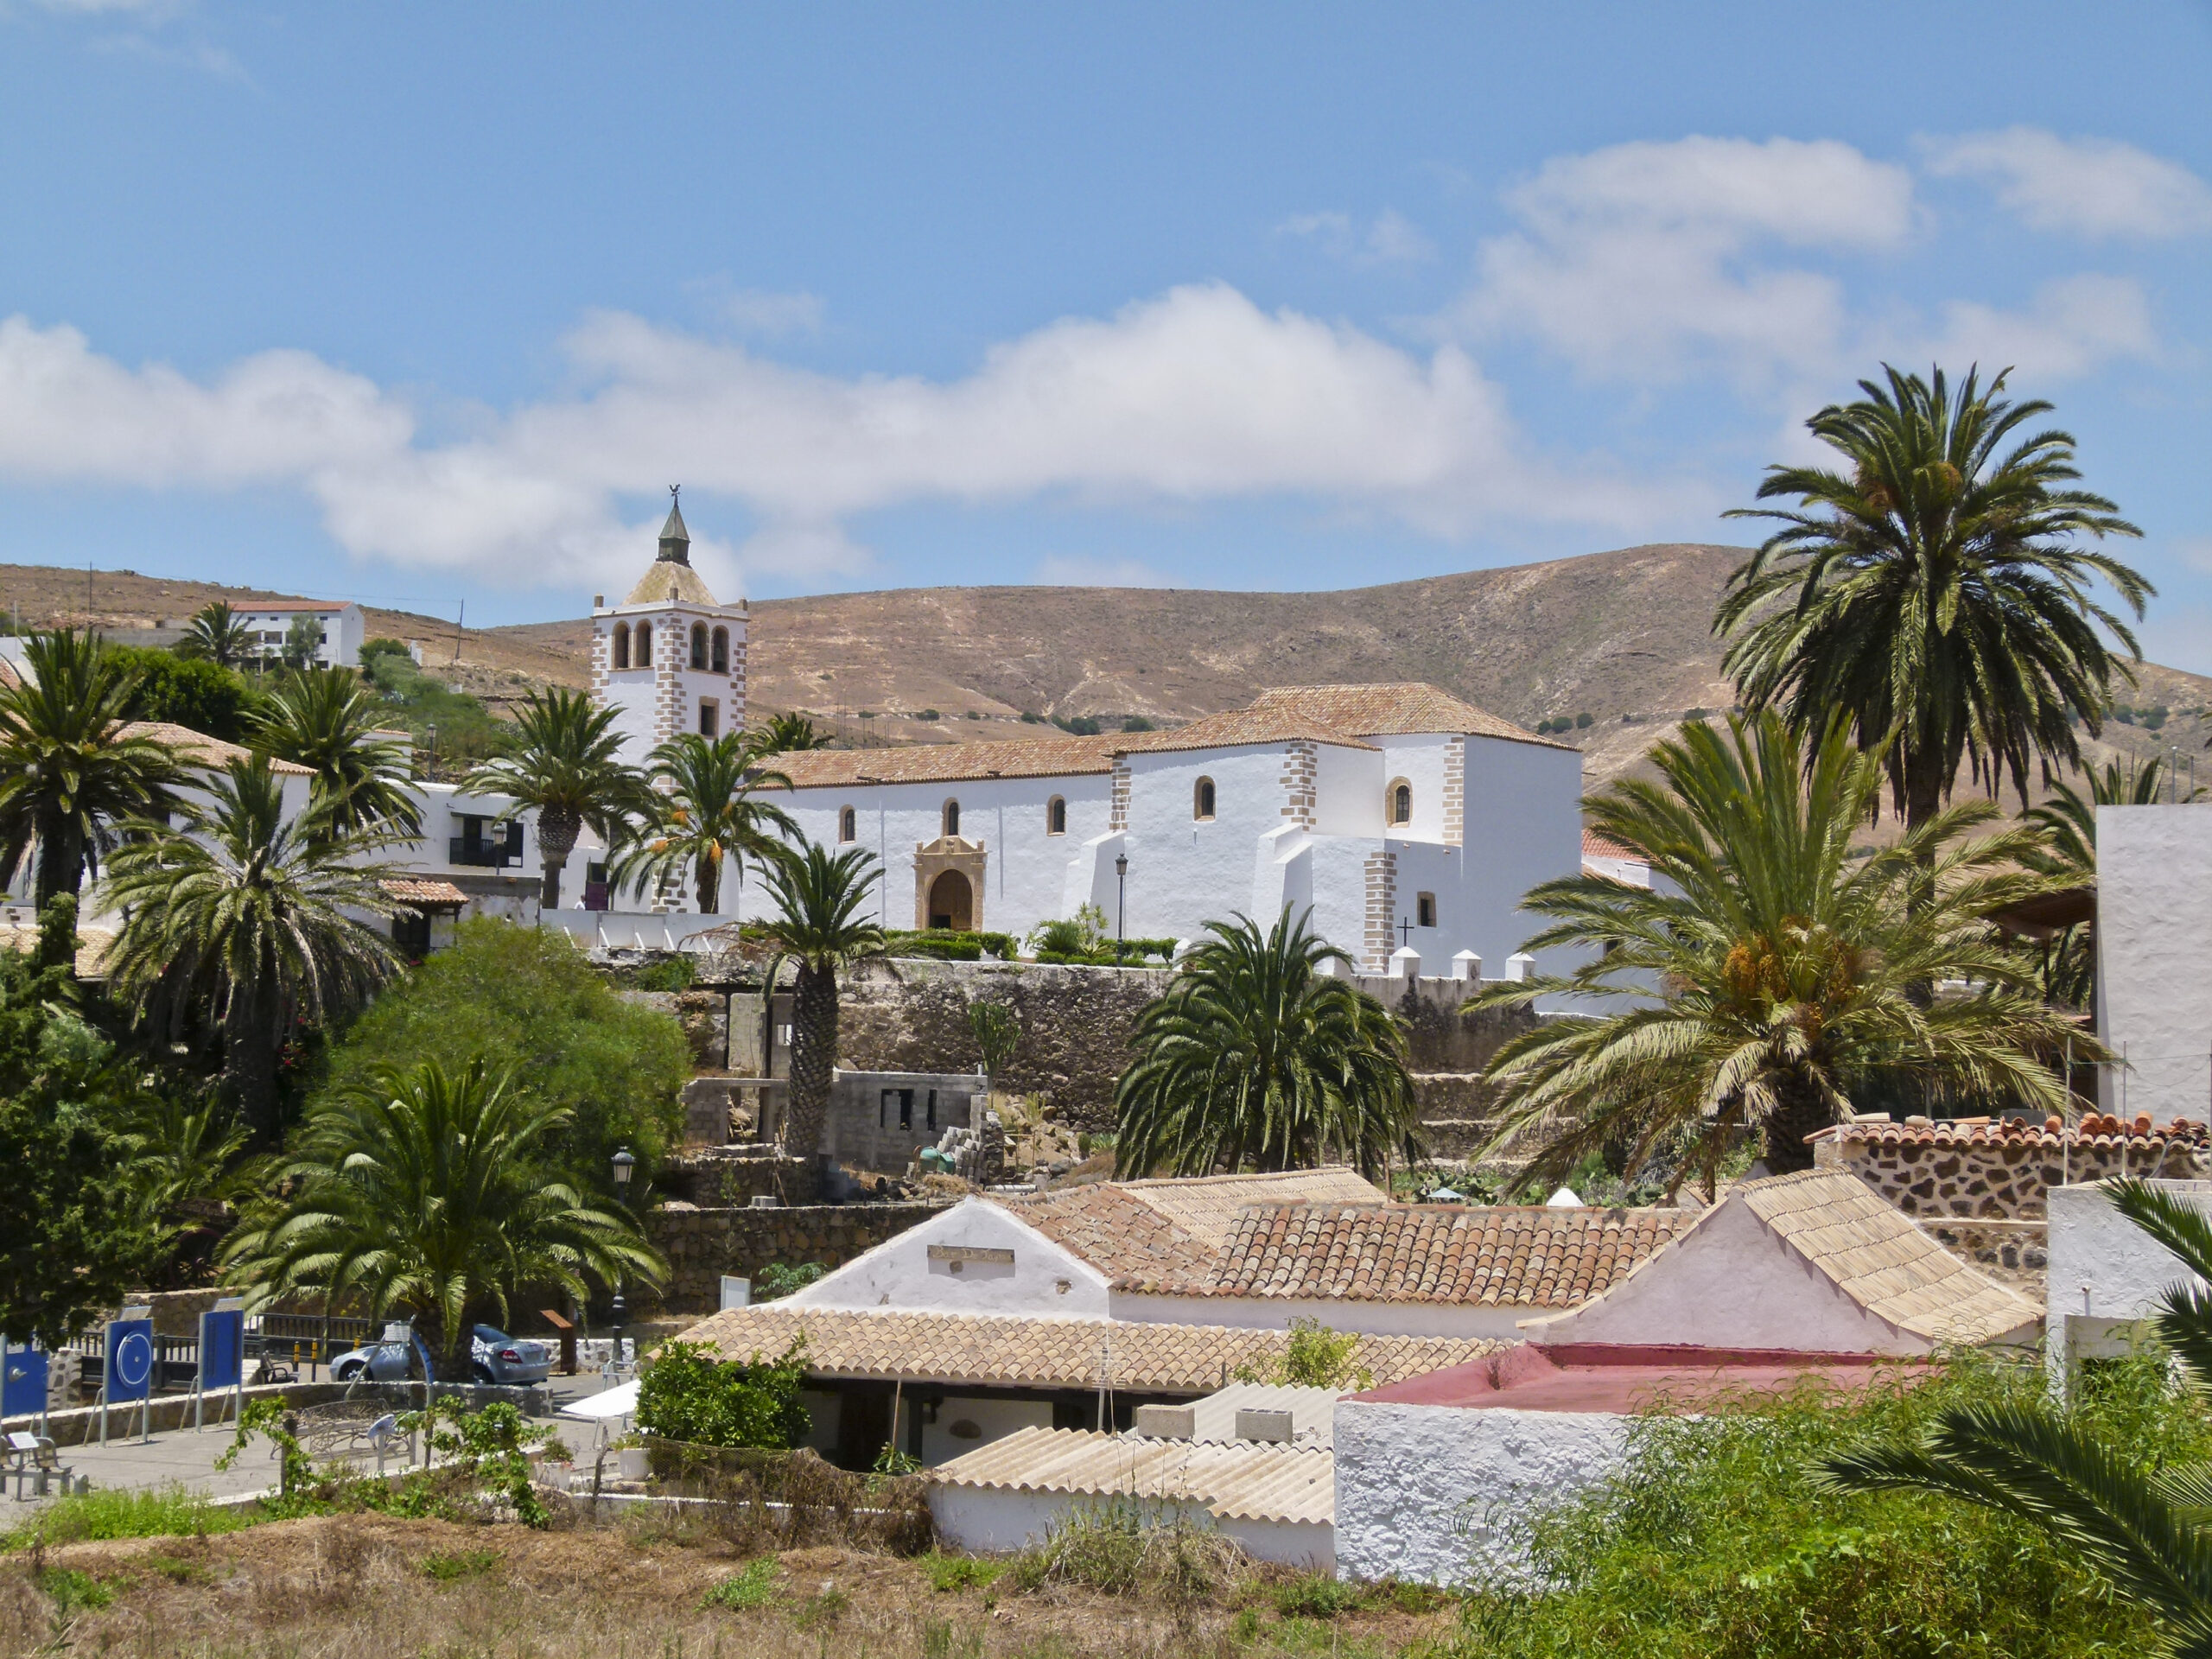 Catedral De Santa Maria Betancuria Fuerteventura Canary Islands Spain 10